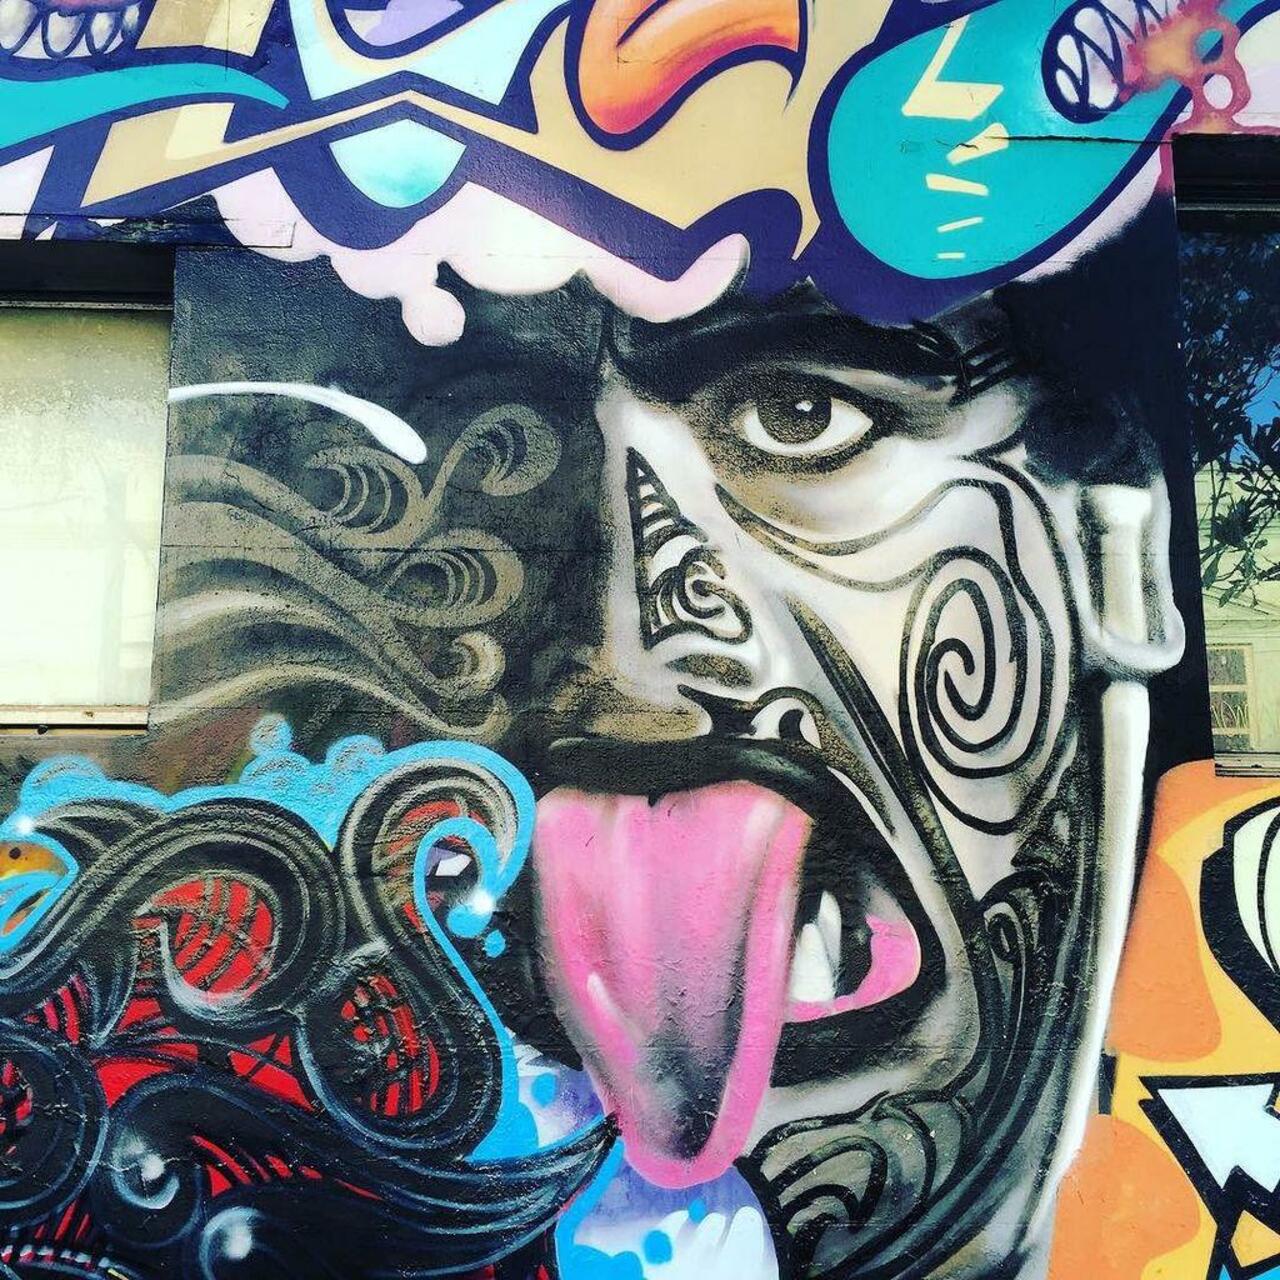 #streetart #graffiti #art #petersham #innerwest #sydney #publicart #artofinsta http://ift.tt/1Lpvt3Q http://t.co/LdV42Xdo32